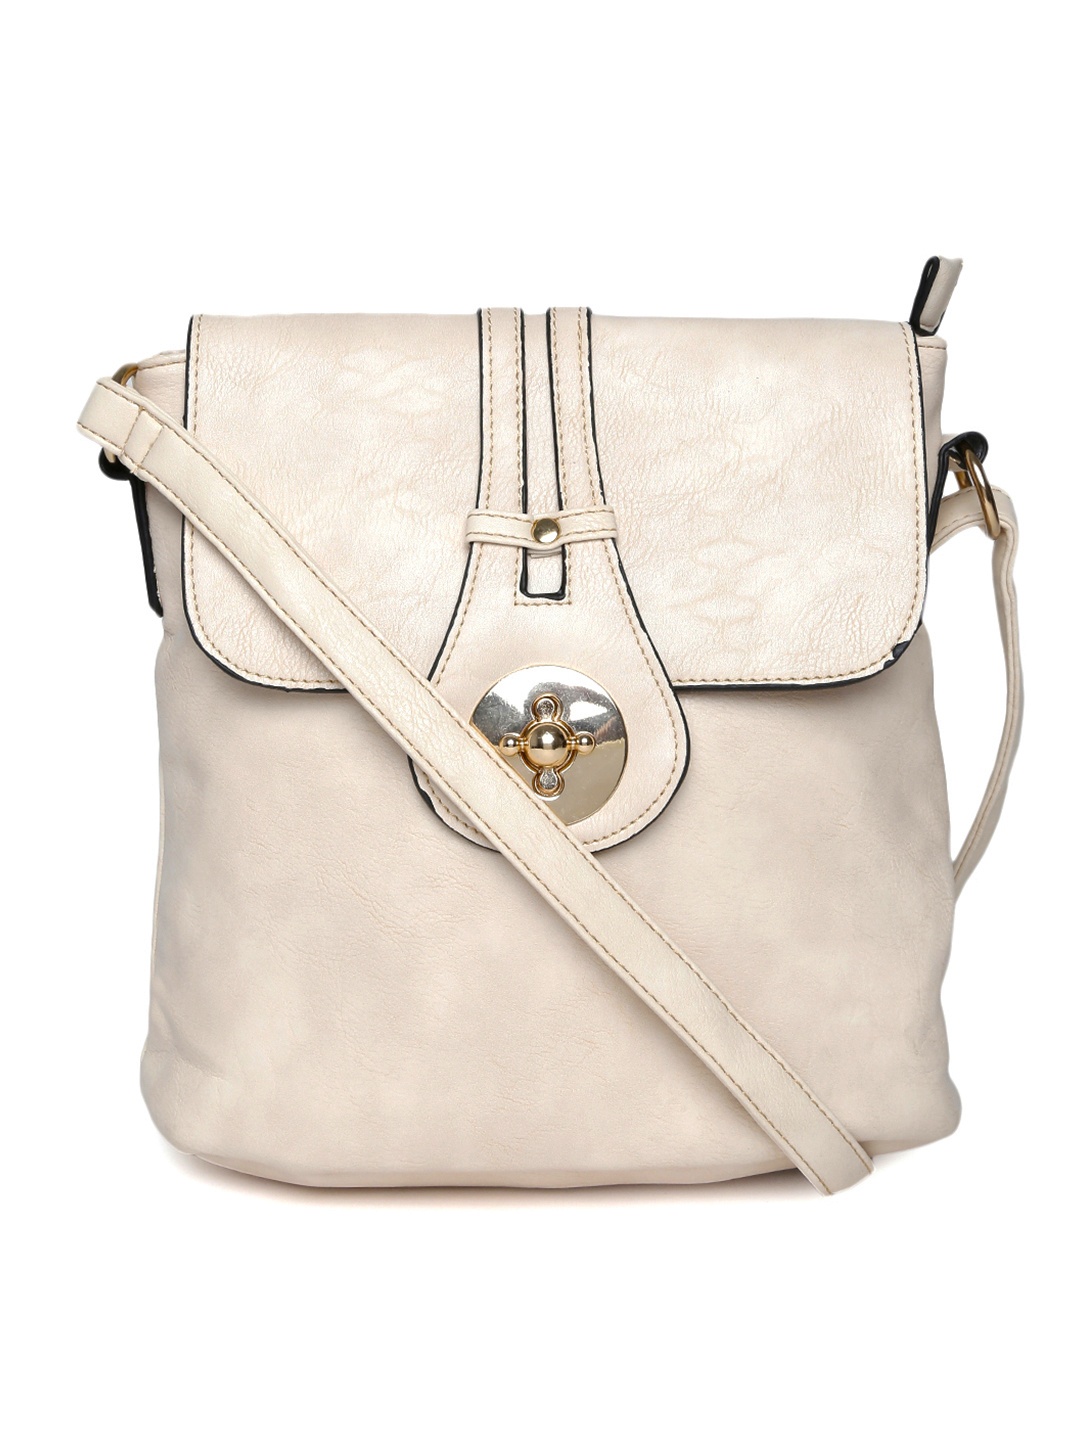 Myntra Ananta Off-White Sling Bag 742882 | Buy Myntra Ananta Handbags at best price online. All ...